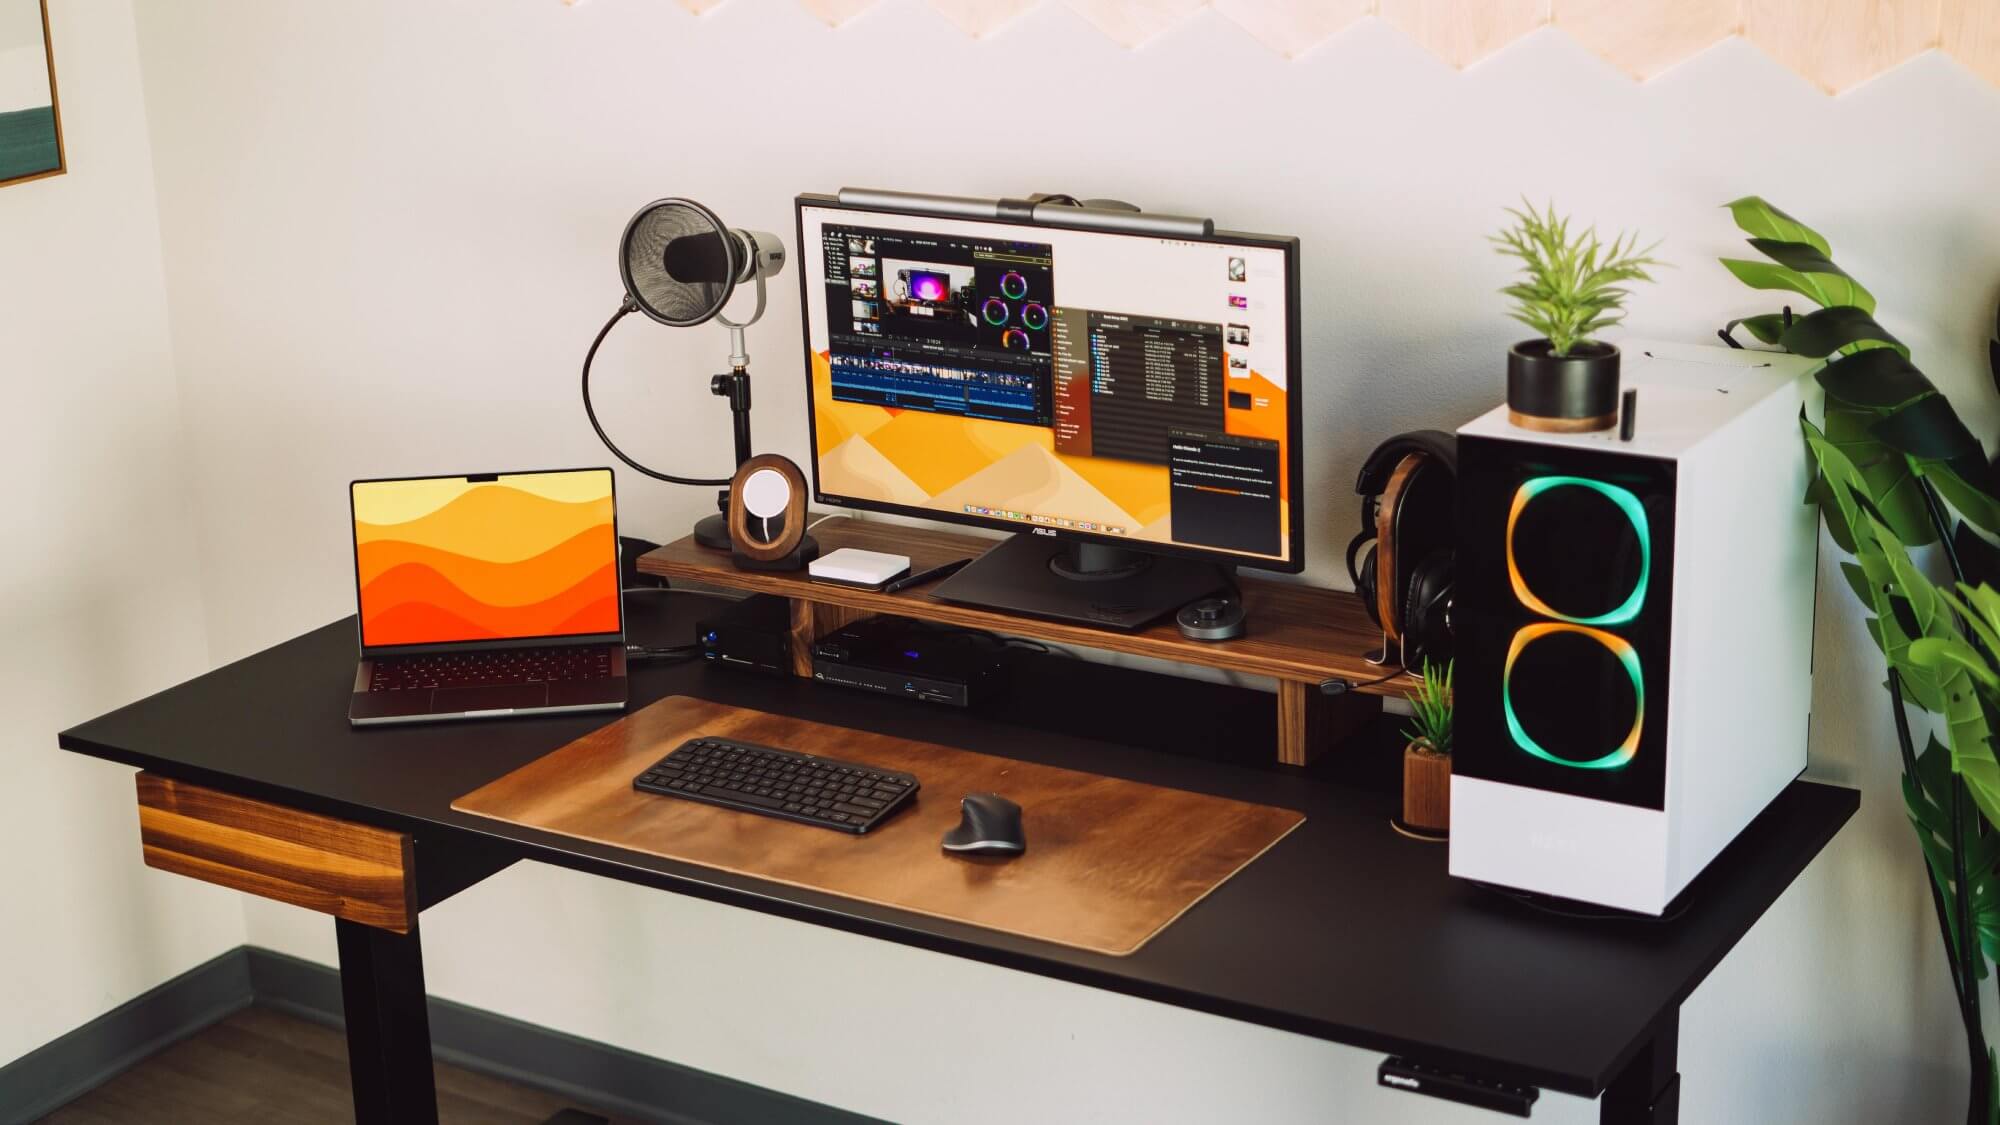 30 Best Dreamy Desk Setup Ideas You Should Check